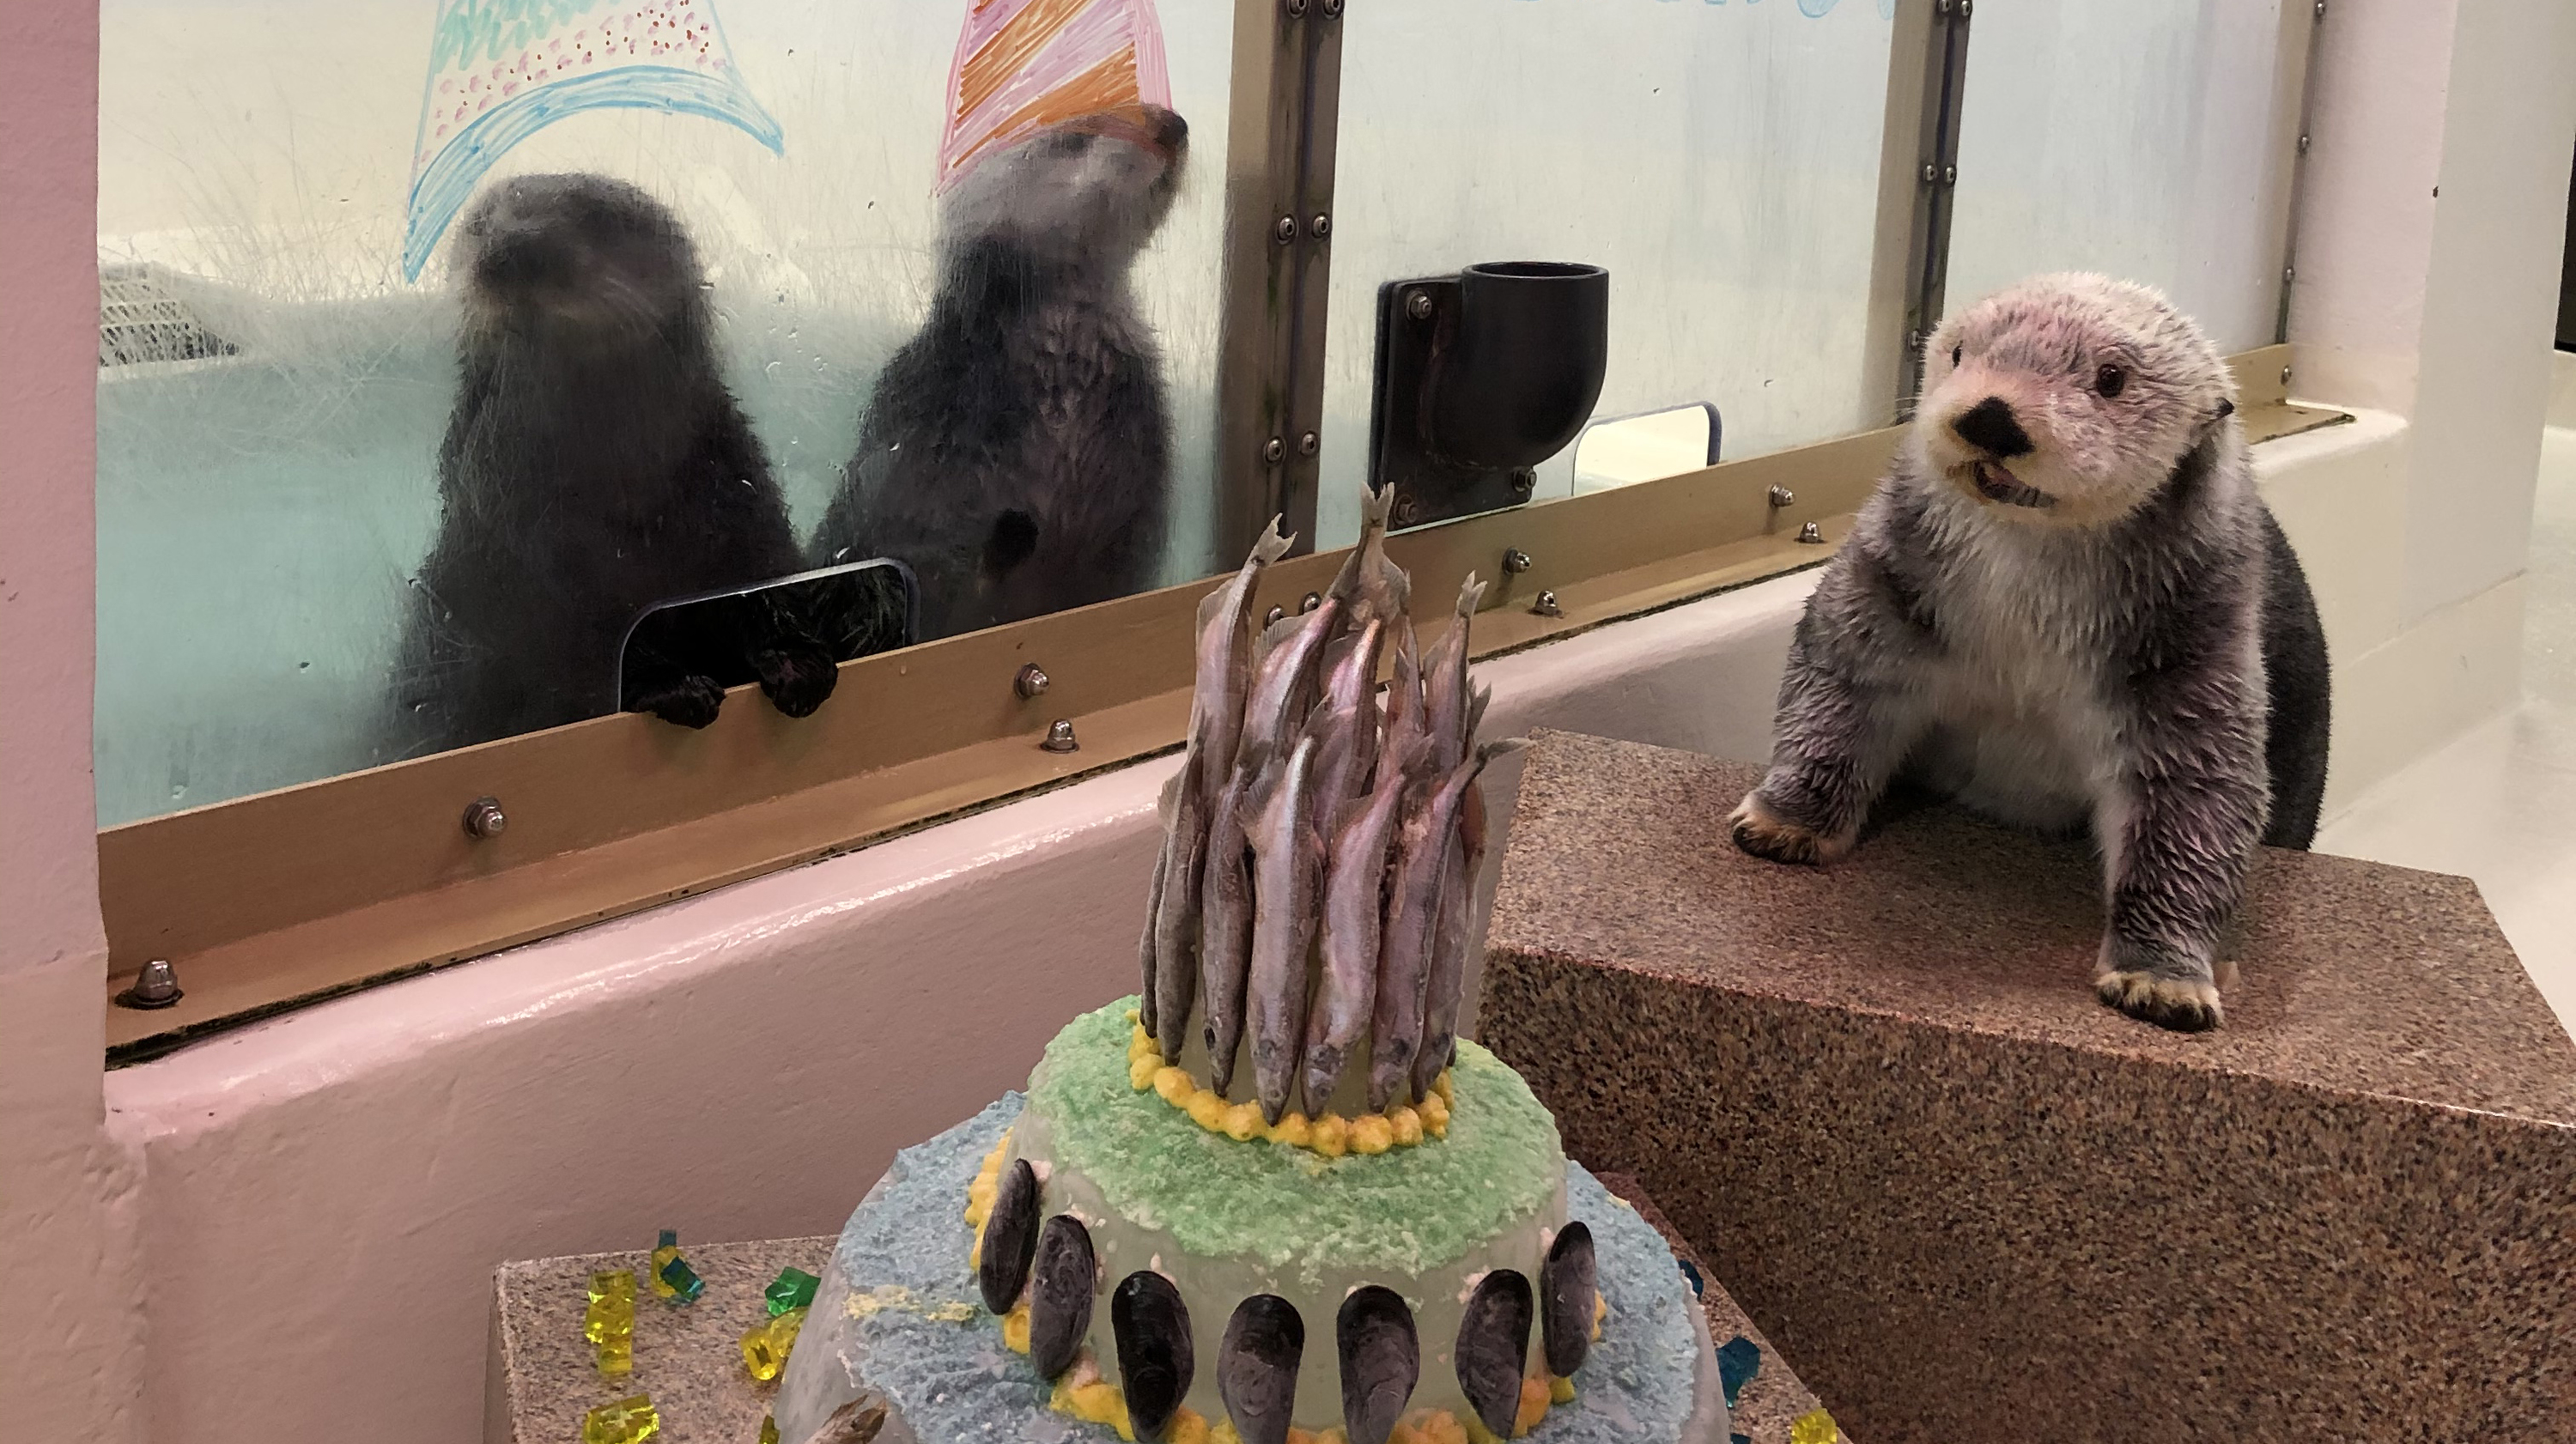 The Shedd Aquarium celebrates its oldest sea otter's birthday with ... - Image